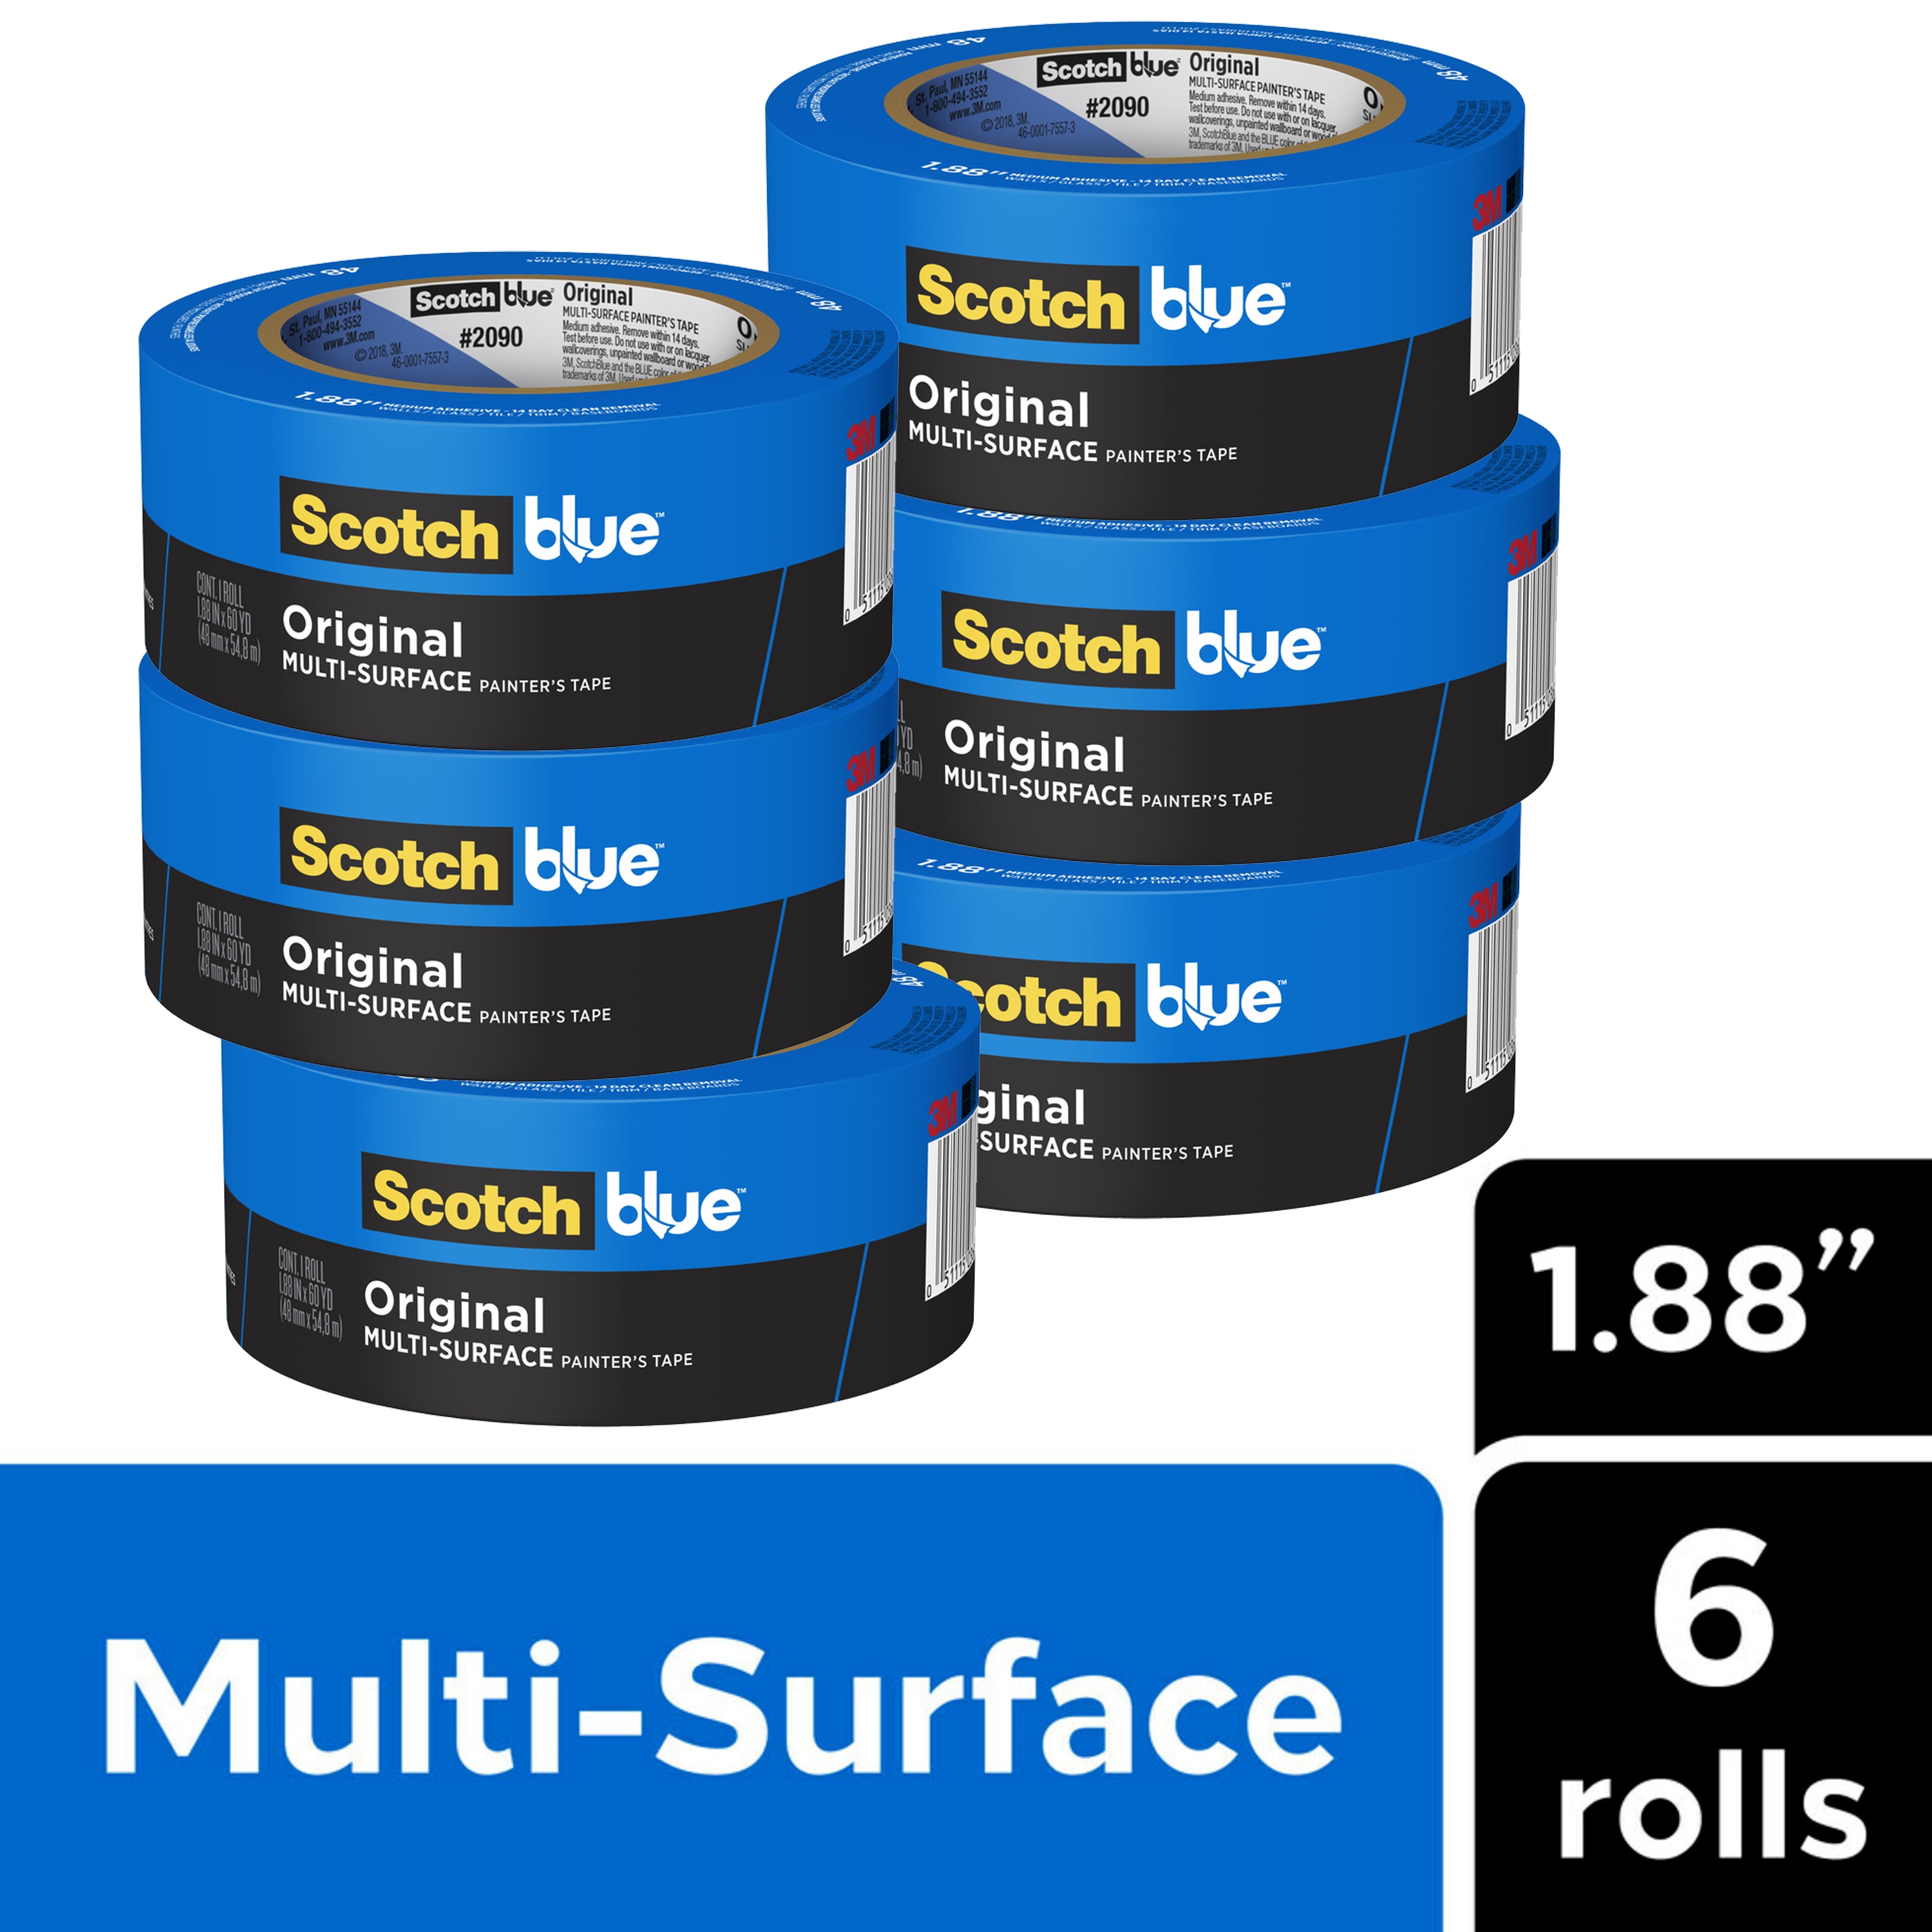 Reviews for 3M ScotchBlue Painter's Tape Applicator (1 Starter